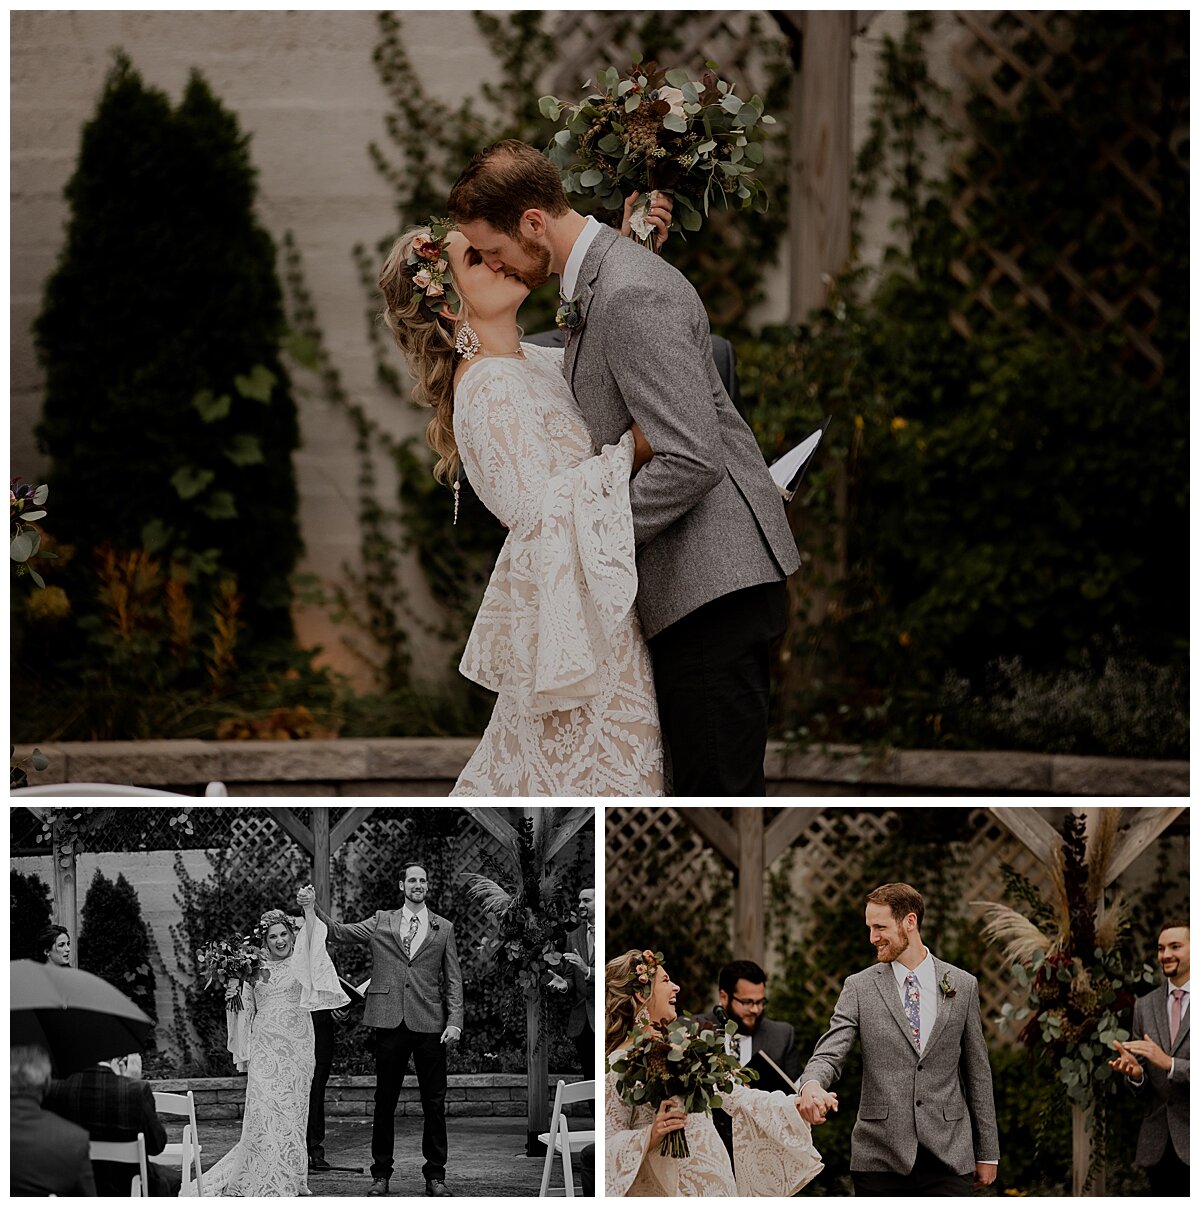 THE IVY HOUSE WEDDING,  MILWAUKEE WEDDING PHOTOGRAPHER, LICHTER PHOTOGRAPHY 37.jpg